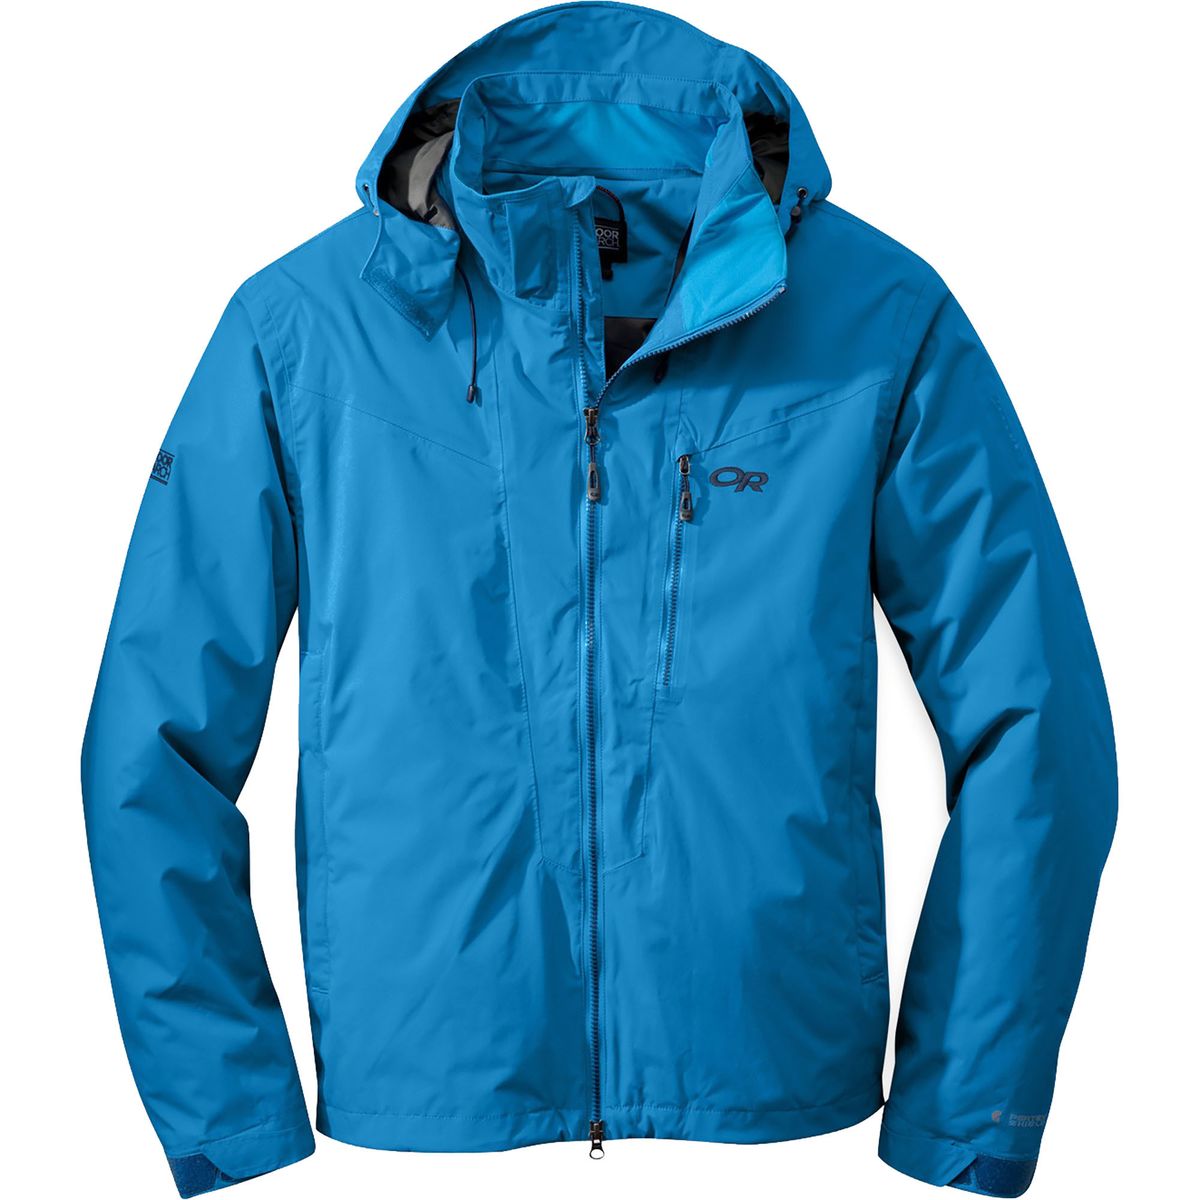 Outdoor Research Igneo Insulated Jacket - Men's | eBay